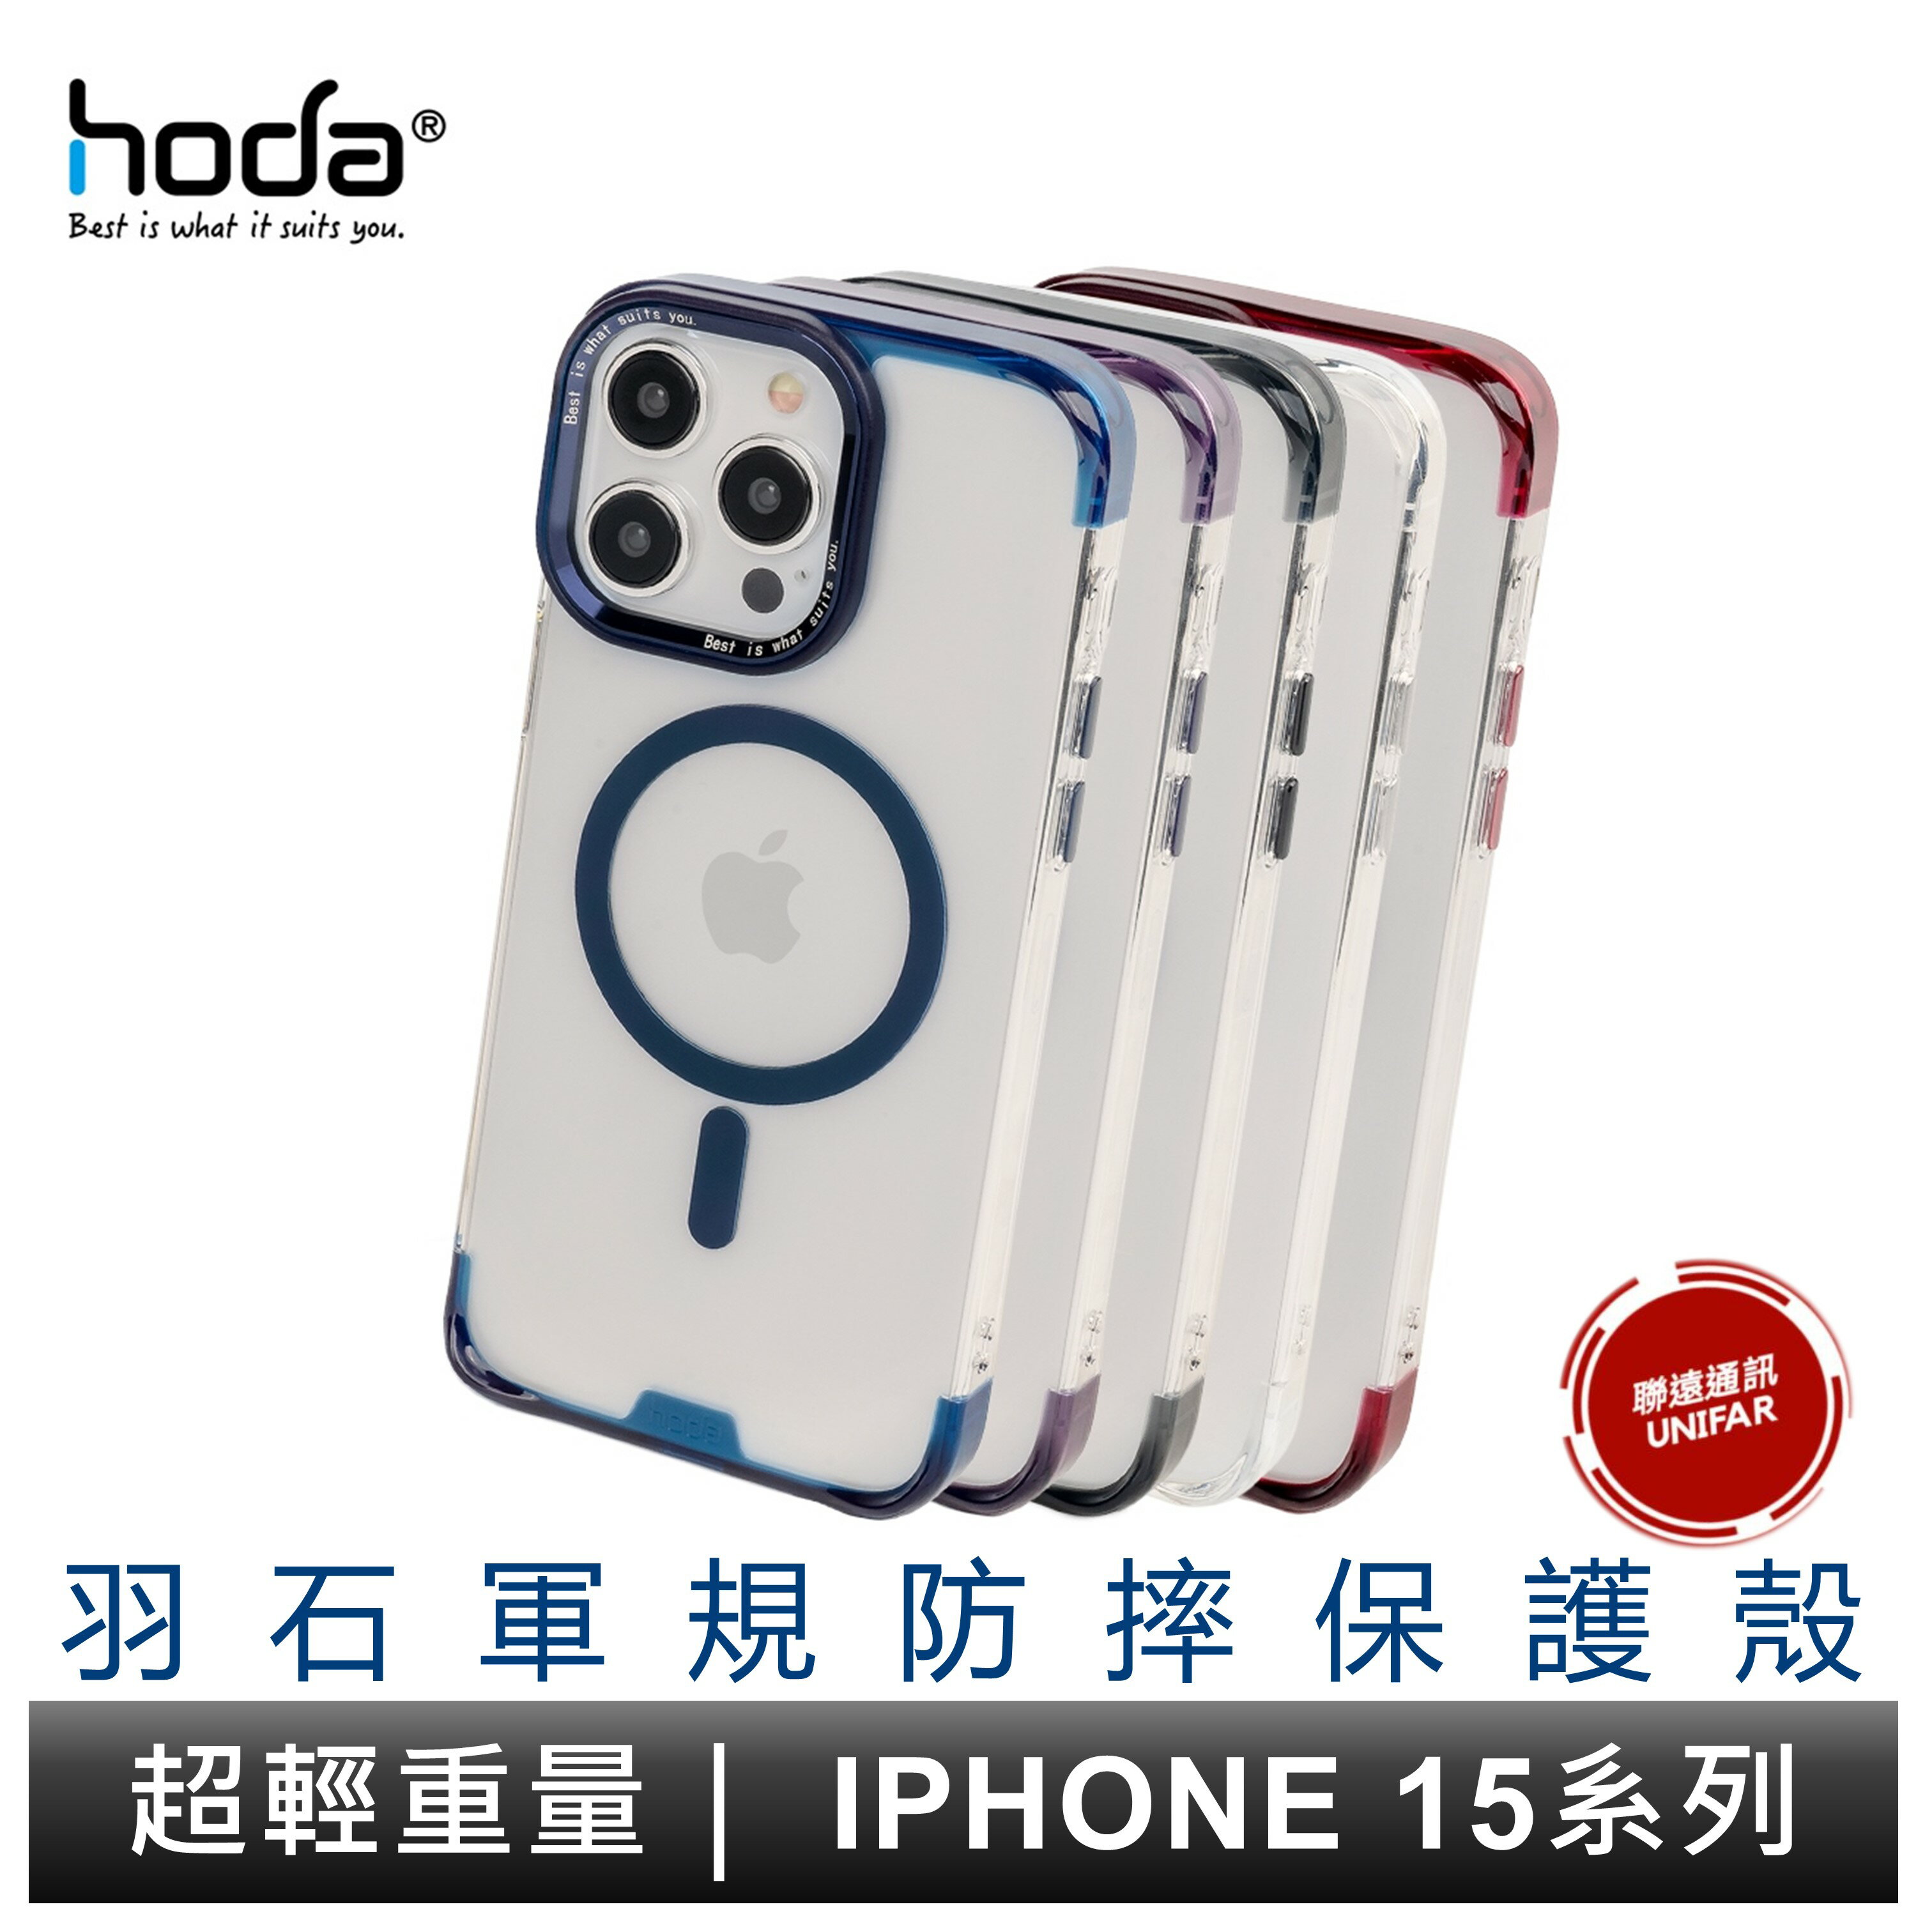 hoda 羽石輕薄防摔保護殼 iPhone 15 全系列 支援MagSafe 原廠公司貨